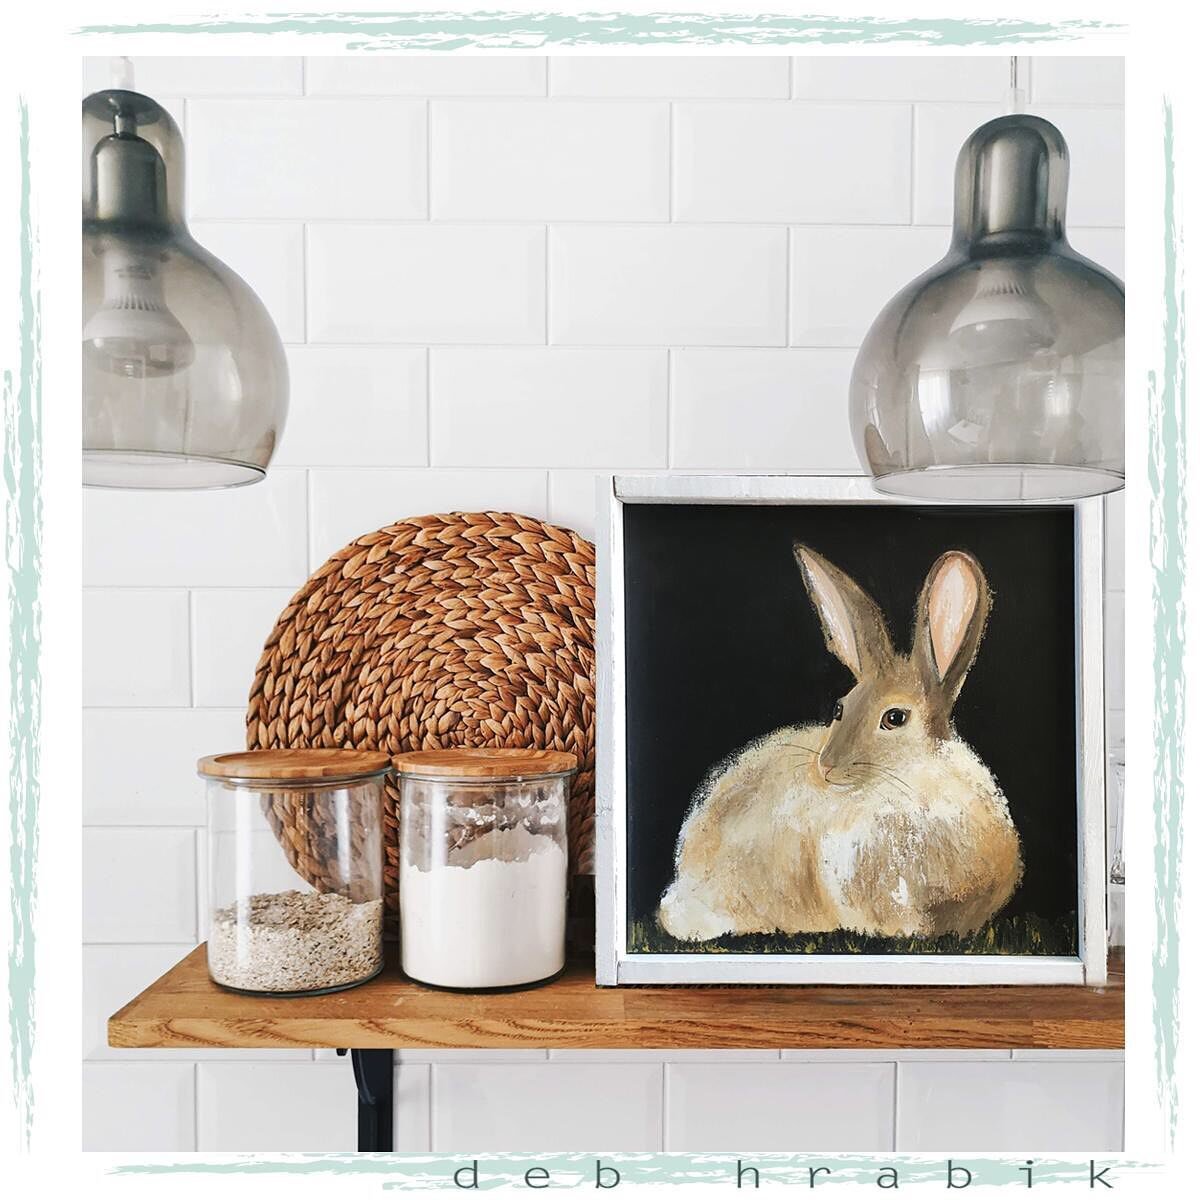 In case you need a brown rabbit on your shelf 😉
..#rabbitpainting #animalpainting #farmhousedecor #etsyseller #etsyshop #debhrabikdesigns